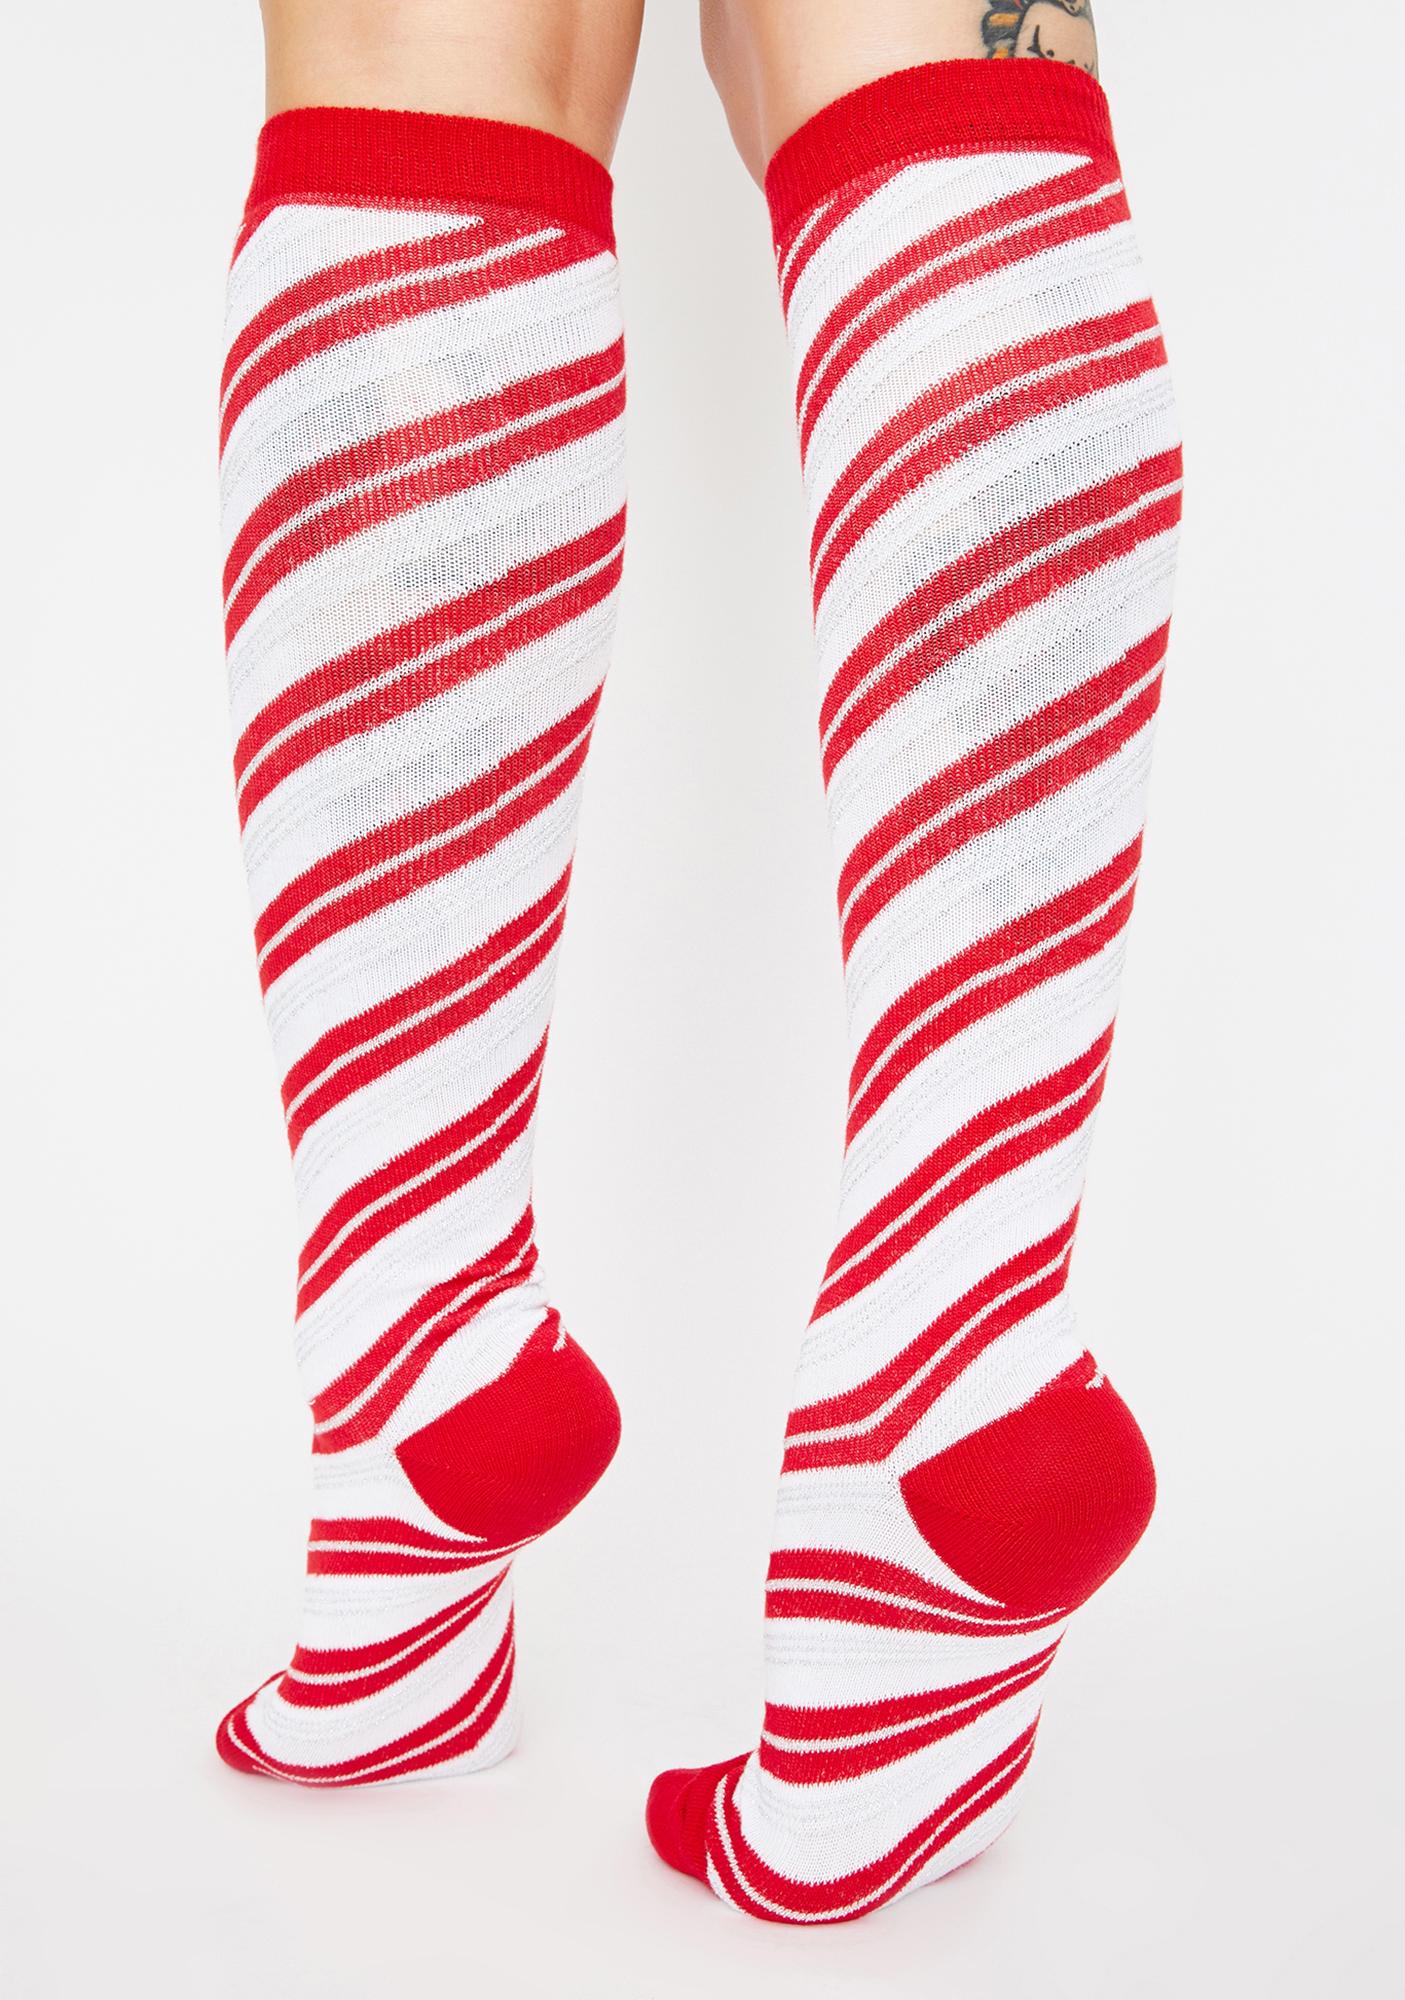 Candy Cane Striped Knee High Socks Red White | Dolls Kill